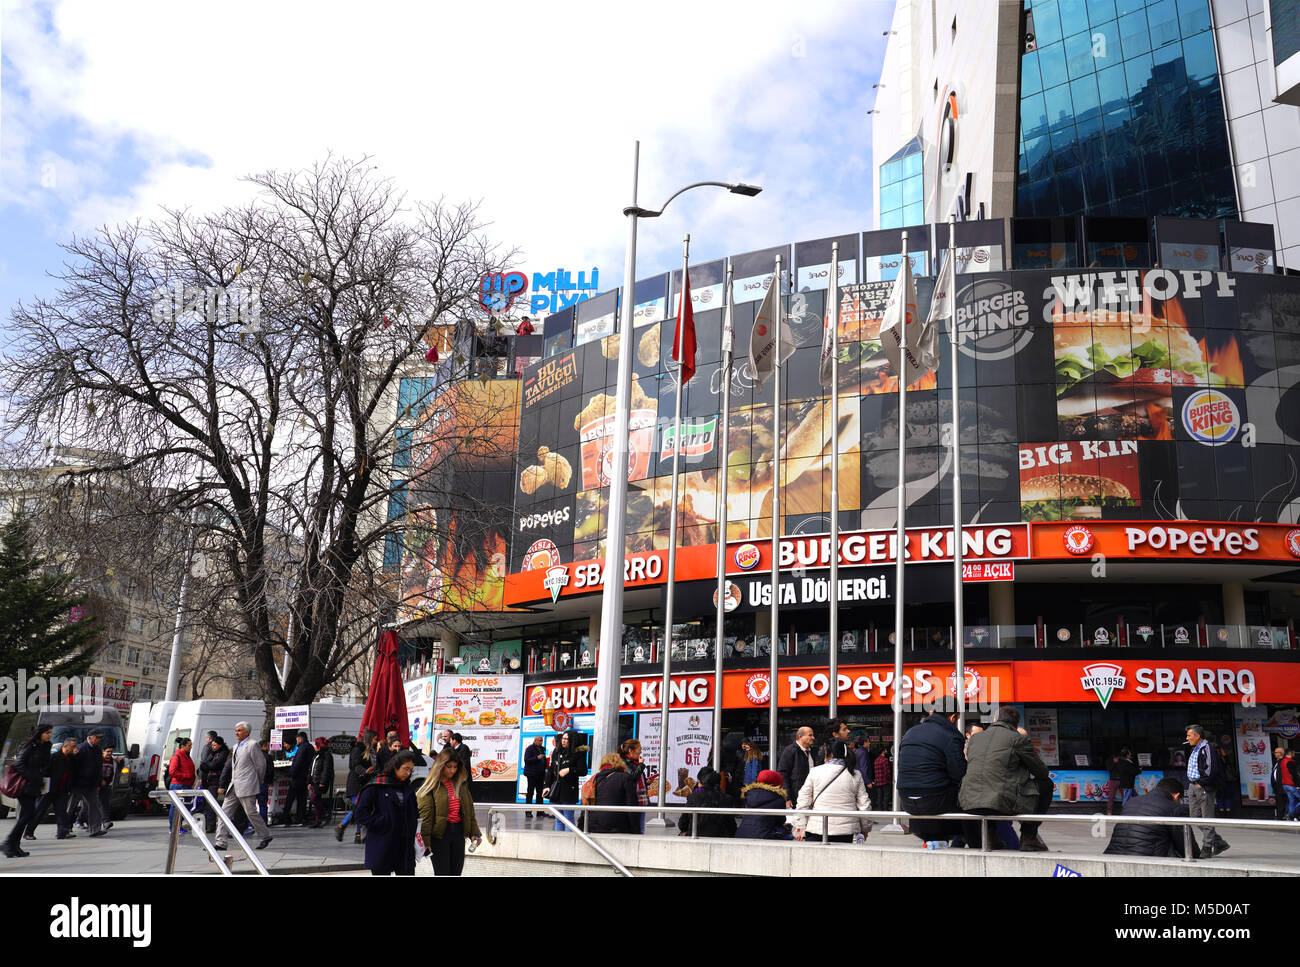 The Restaurants 'Burger King, Popeyes, Sbarro' in Kizilay Shhooping Center in city center of Ankara, Turkey Stock Photo